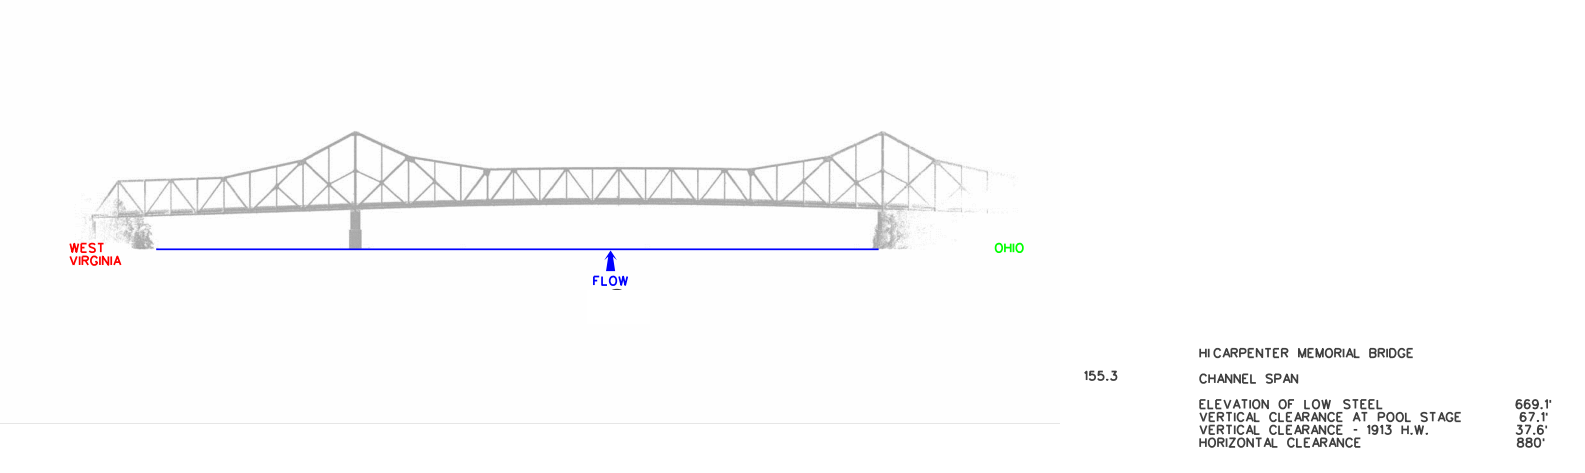 HI Carpenter Memorial Bridge Clearances | Bridge Calculator LLC